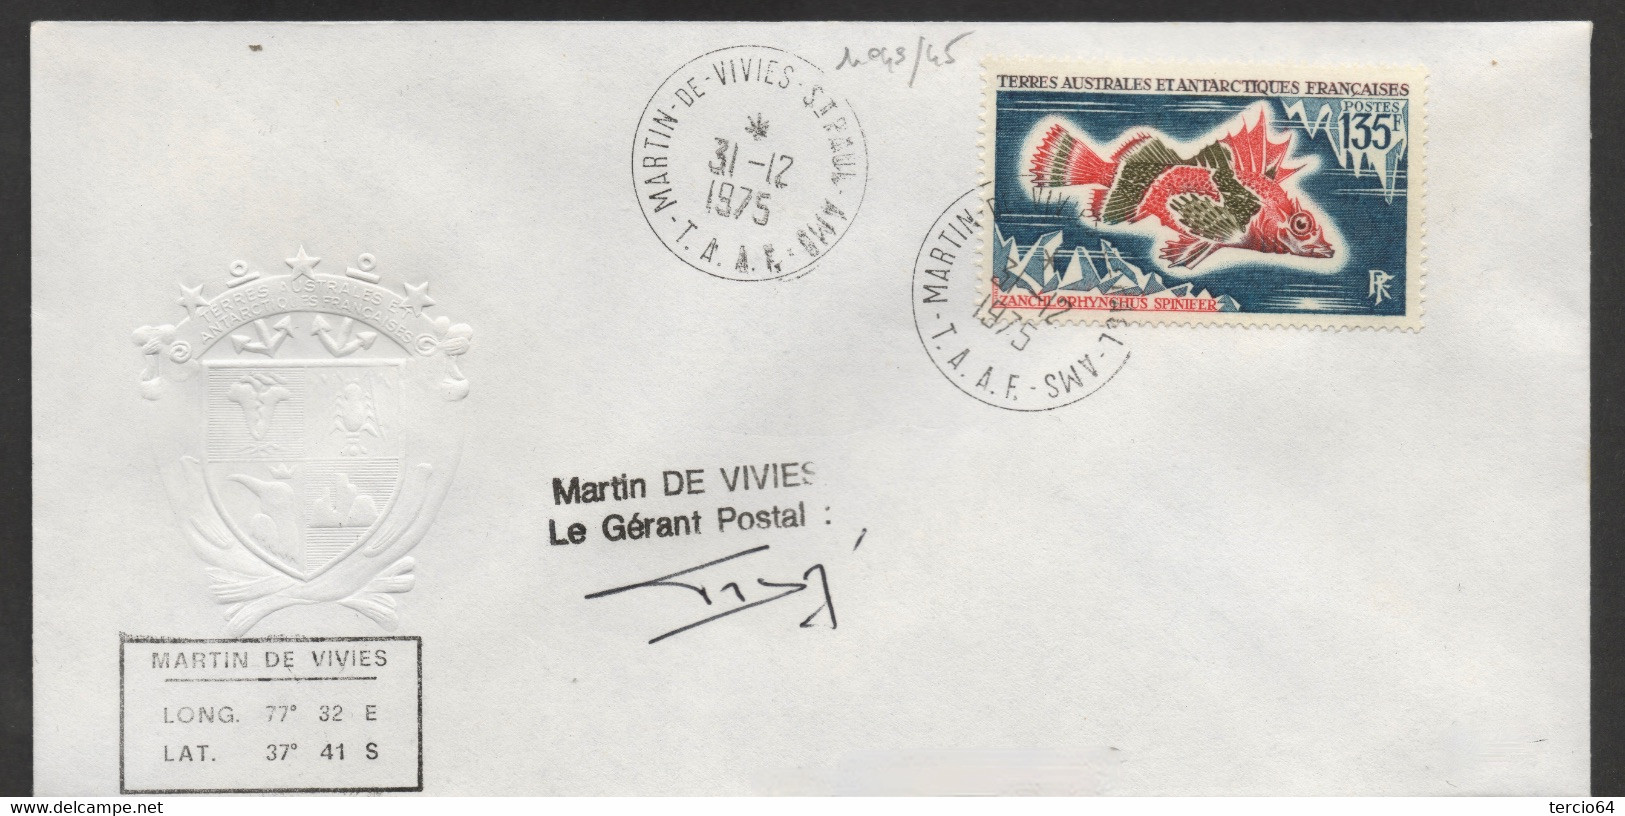 LOT  vrac TAAF PLUS DE 30 timbres seuls sur Lettre de Martin de Viviès cf scans TTB